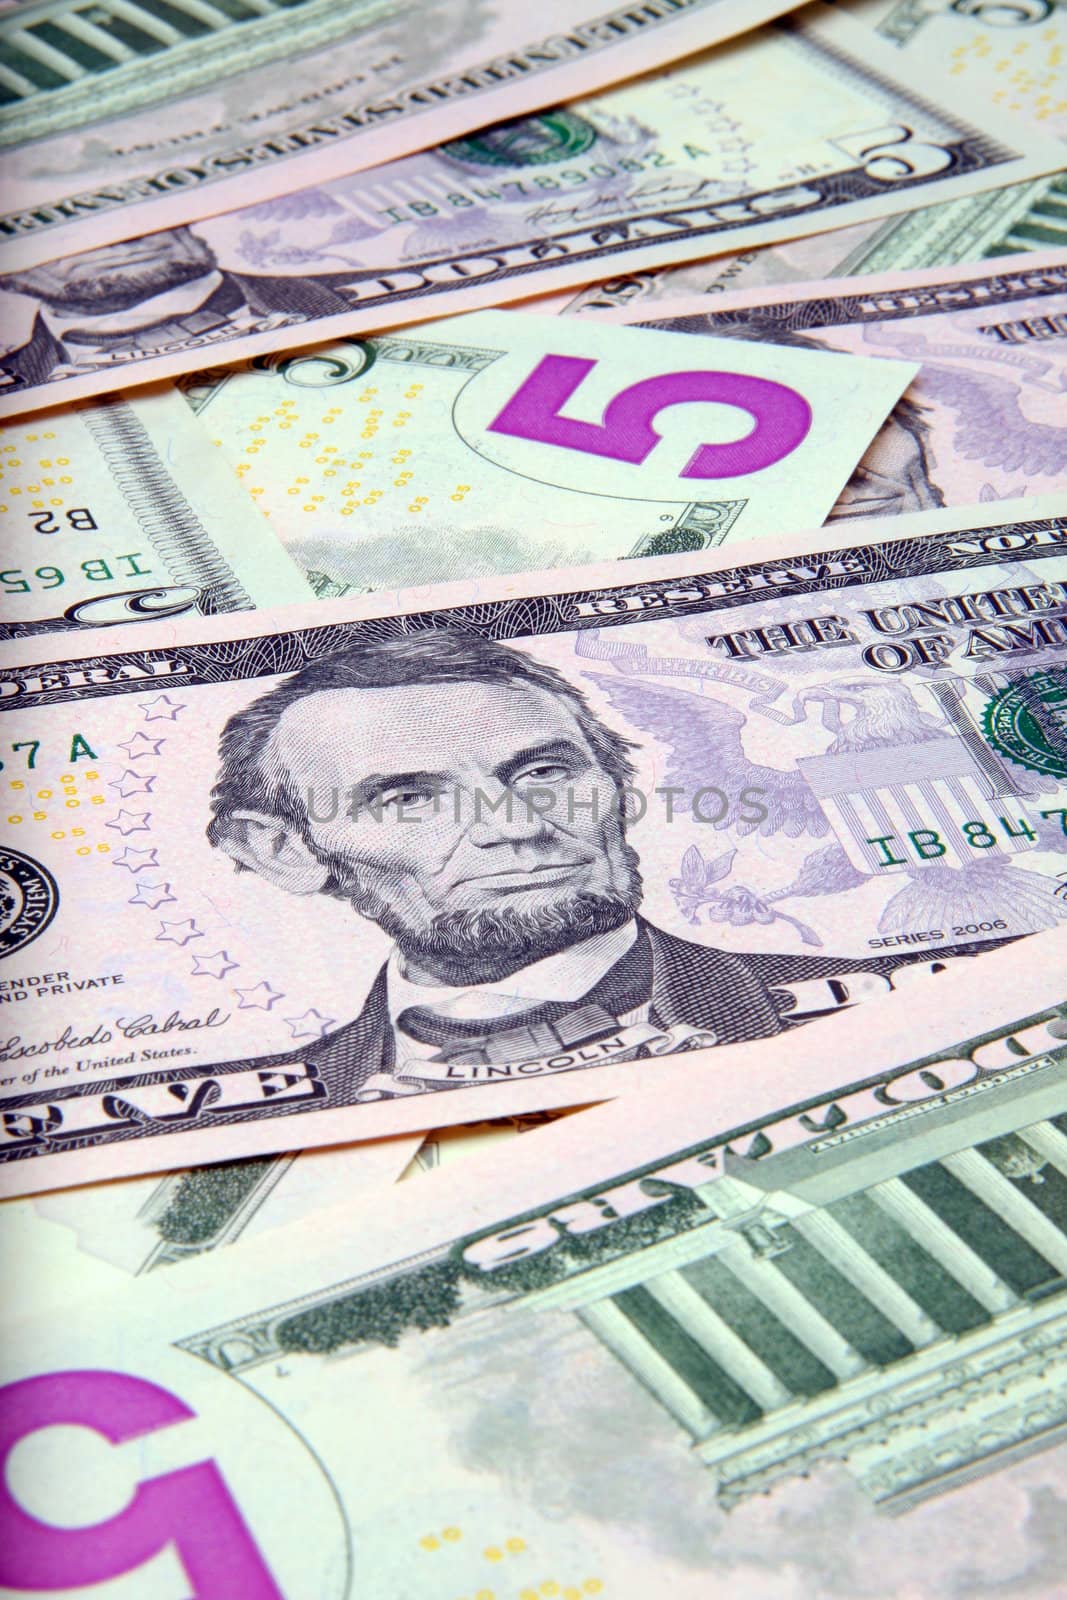 Pile of US $5 bills - new fives